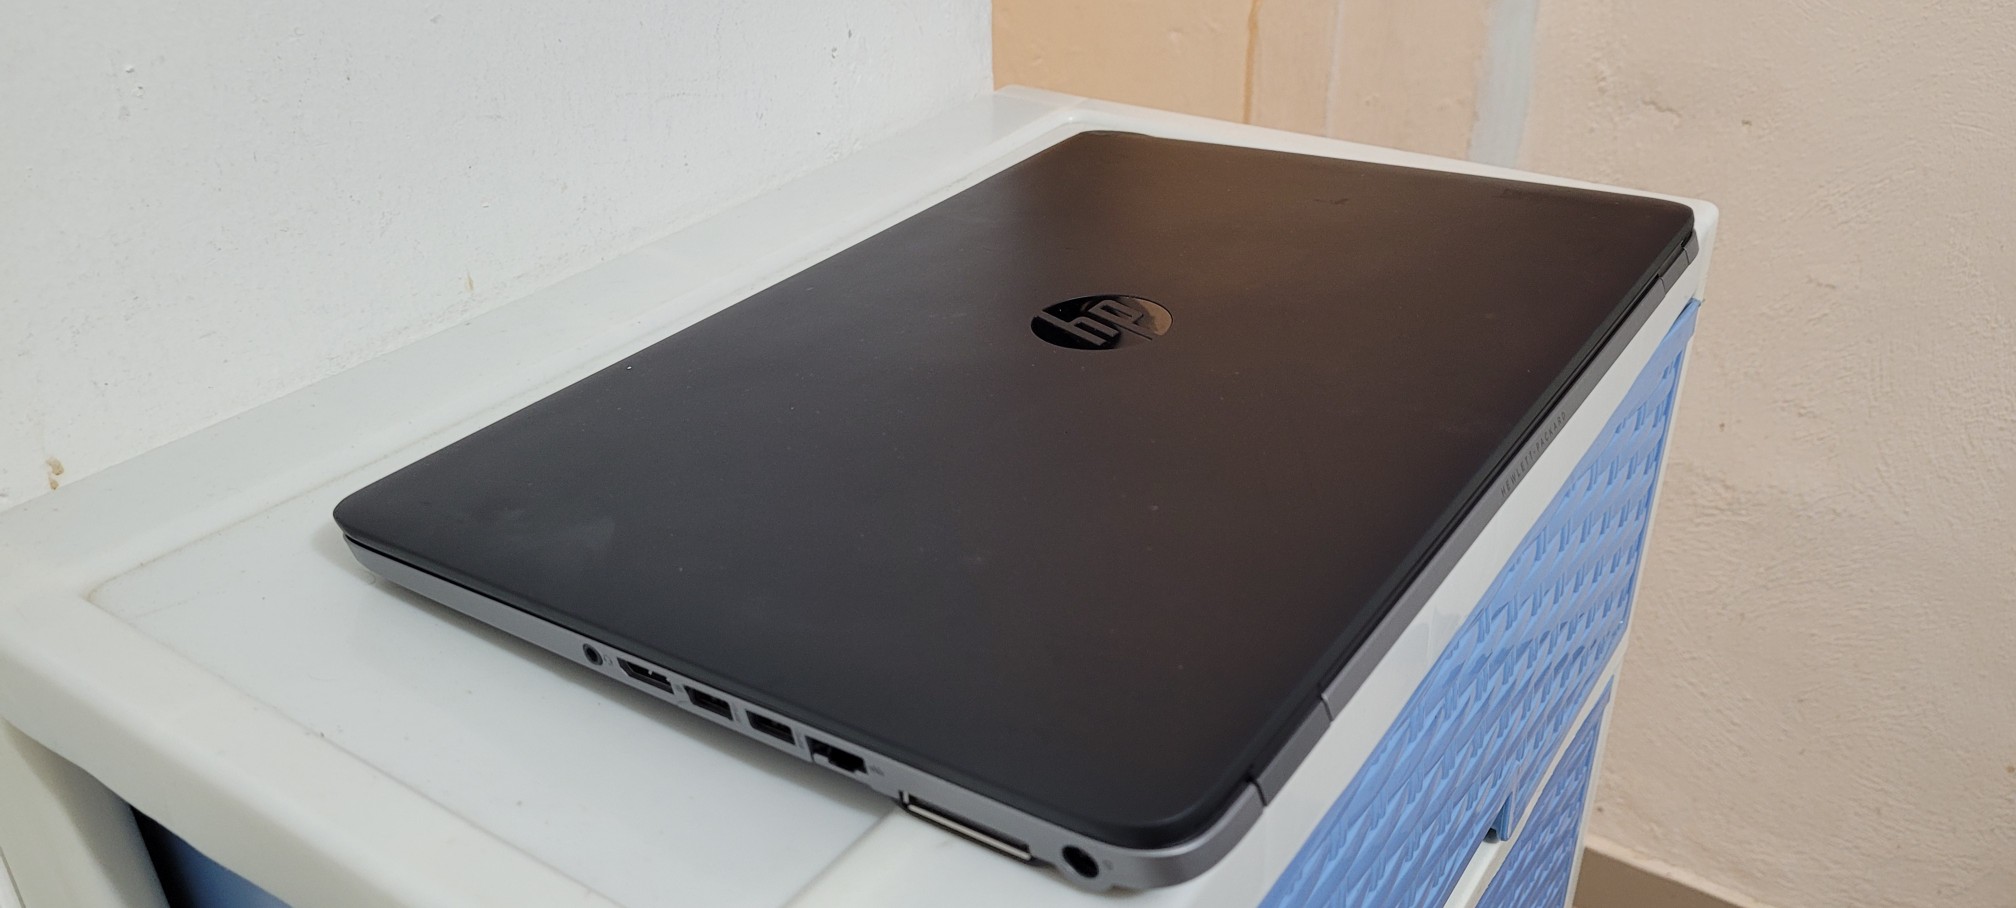 computadoras y laptops - laptop hp 650 17 Pulg Core i5 6ta Gen Ram 8gb ddr4 Disco 256gb SSD hdmi 2